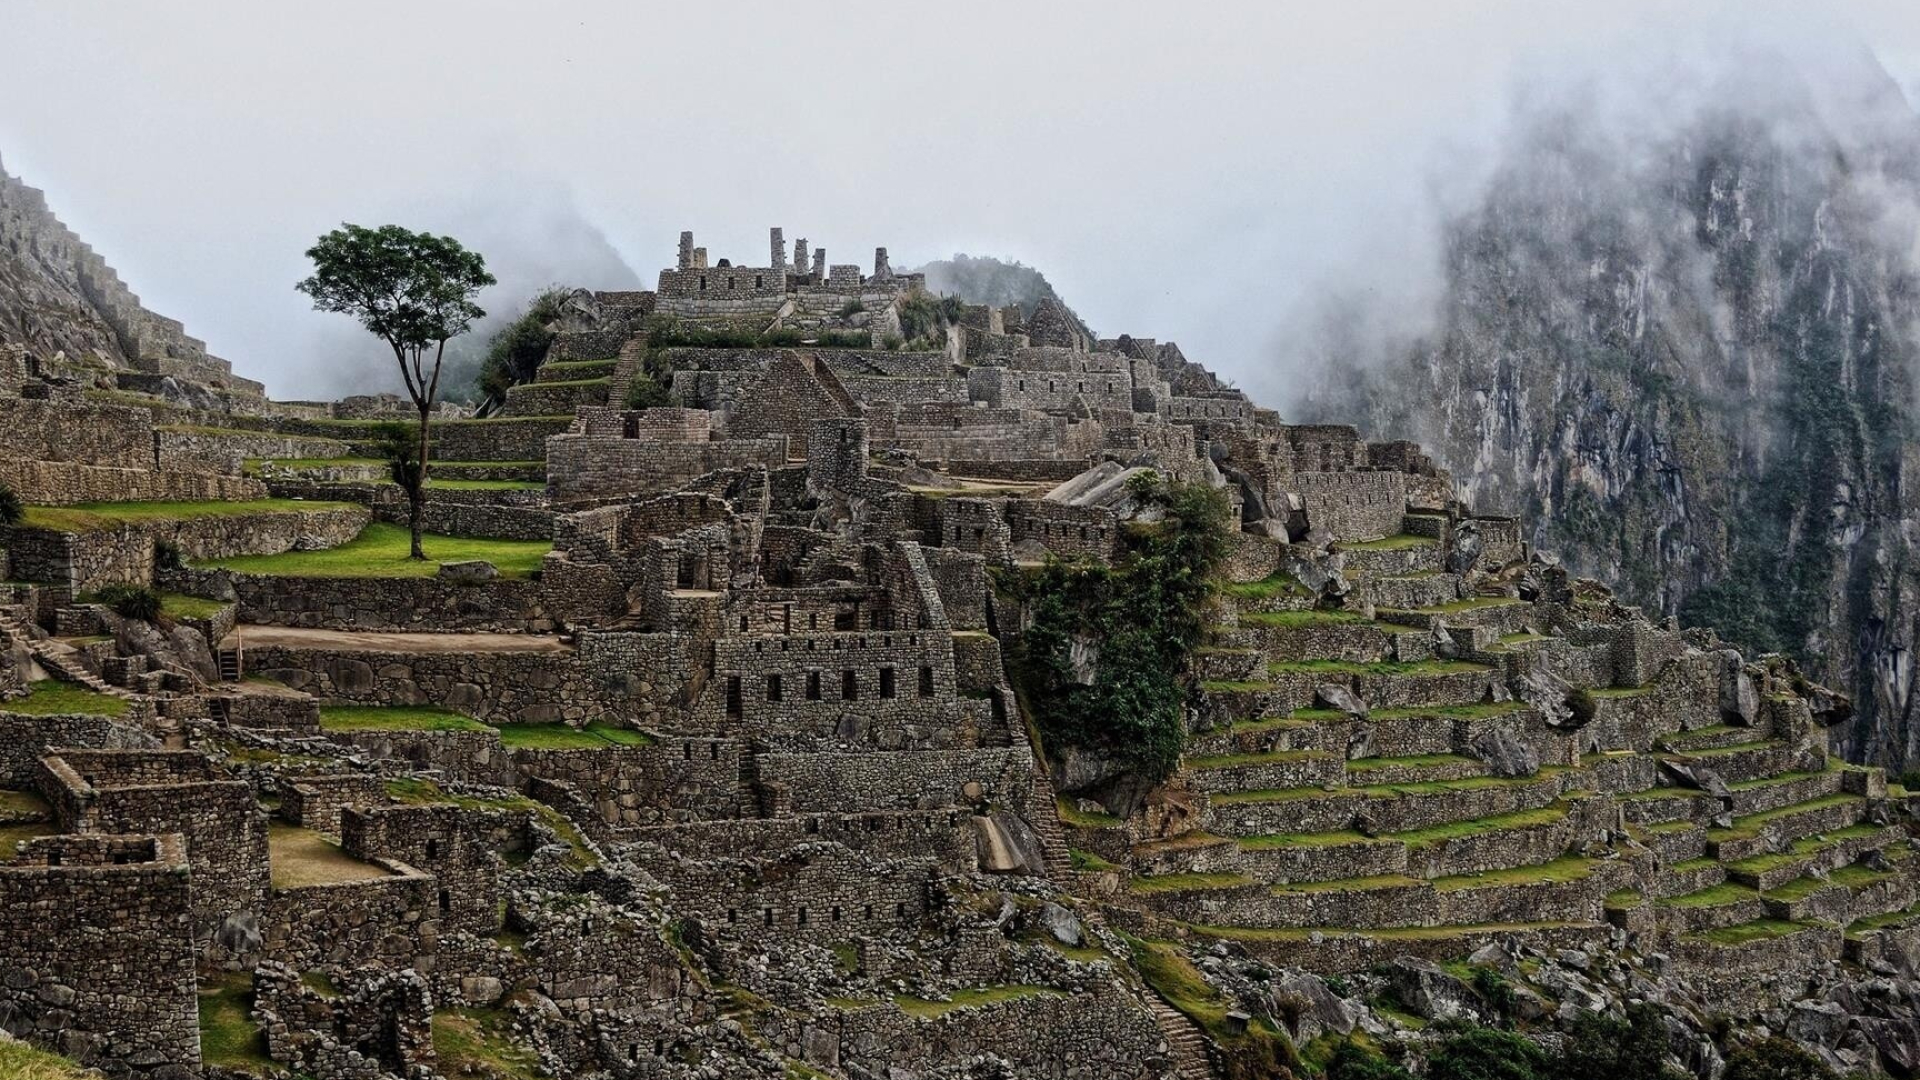 Machu Picchu: One of the most familiar symbols of the Incan Empire, Ruins. 1920x1080 Full HD Wallpaper.